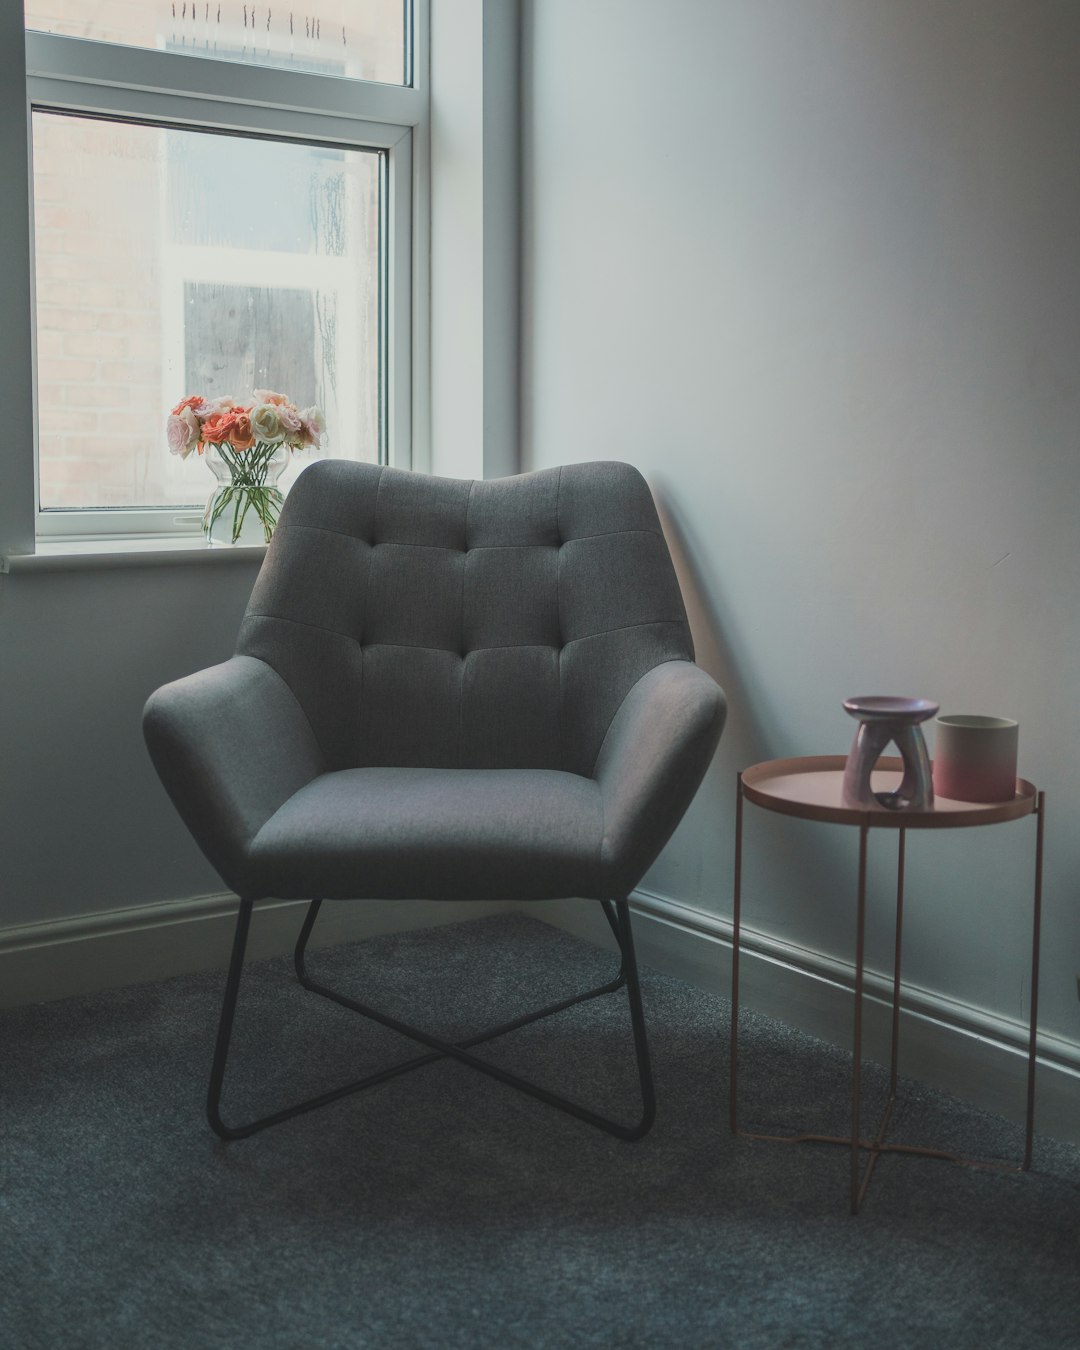  gray sofa chair beside glass window armchair